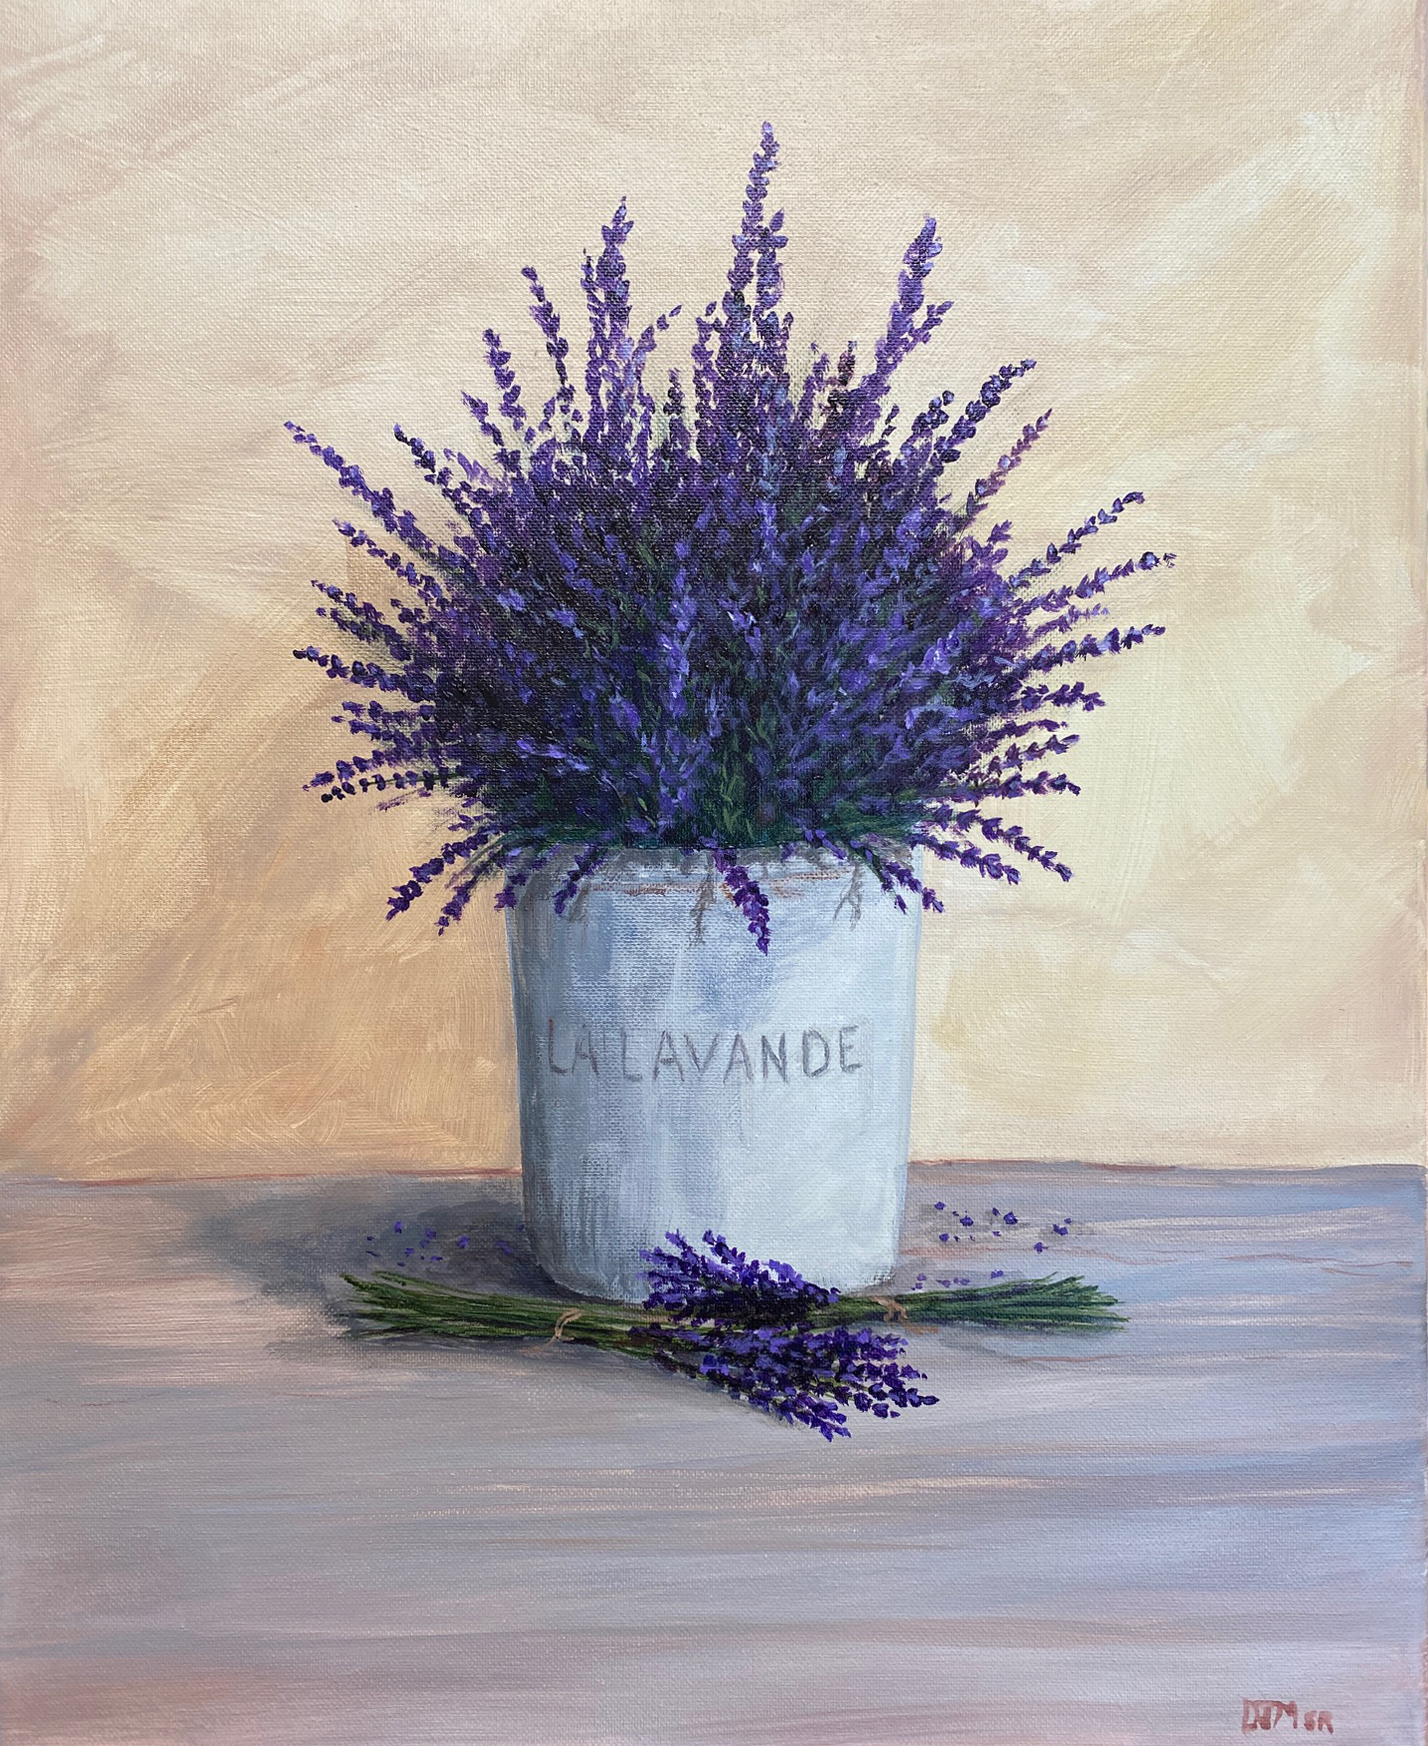 "La Lavande" Acrylic on canvas painting of lavender